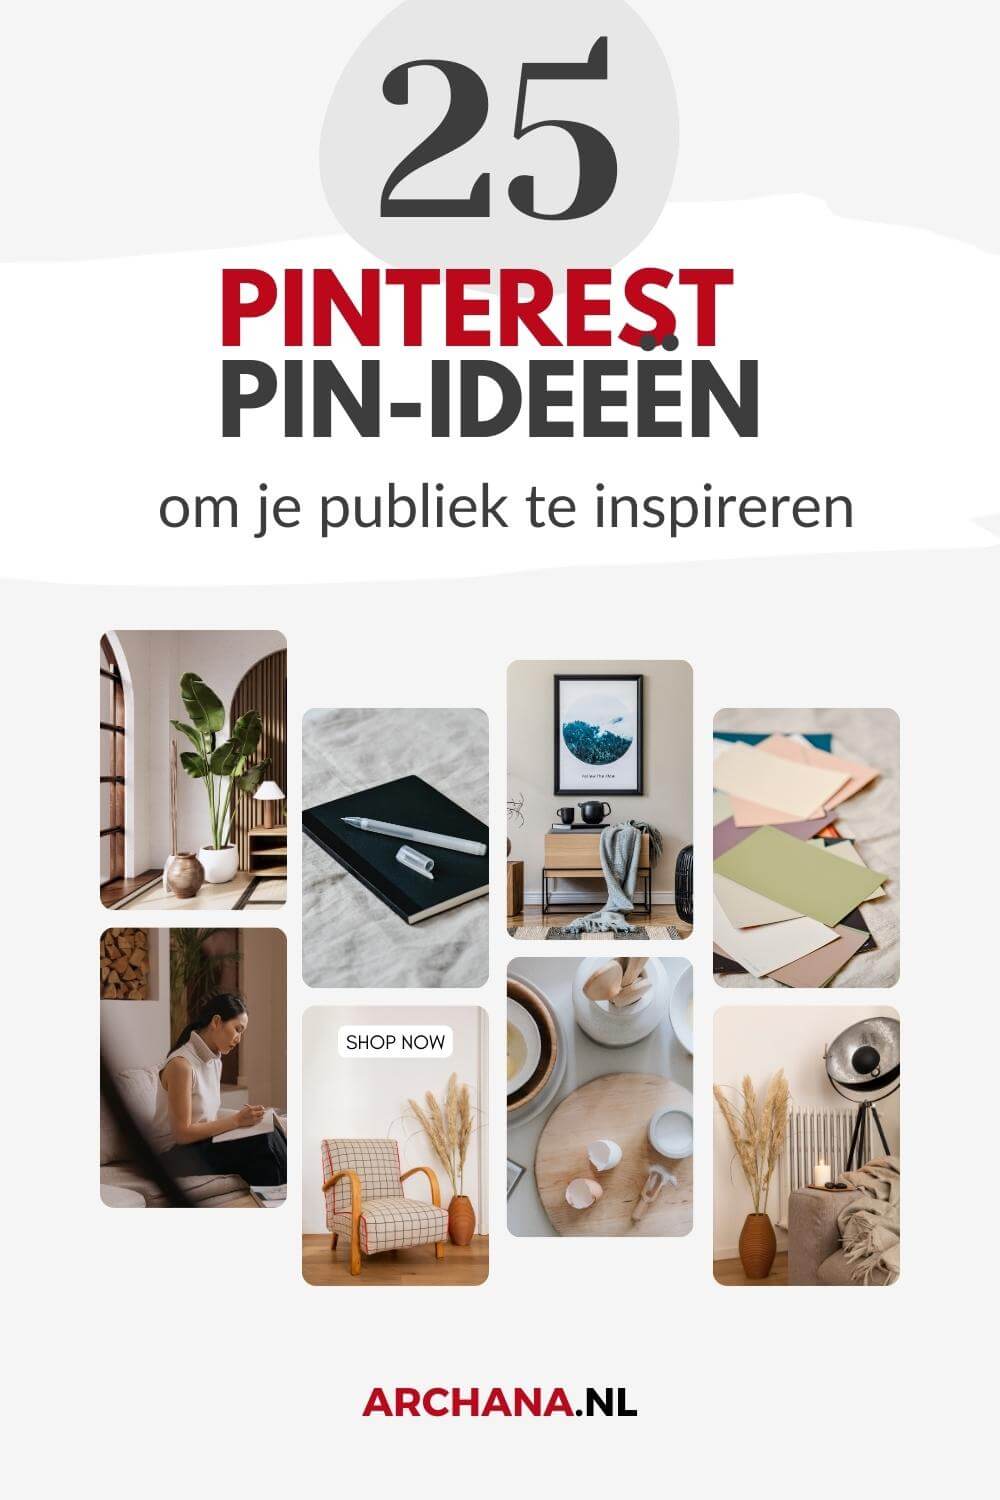 25 Pinterest Pin-ideeën om je publiek te inspireren - Pinterest marketing tips - ARCHANA.NL